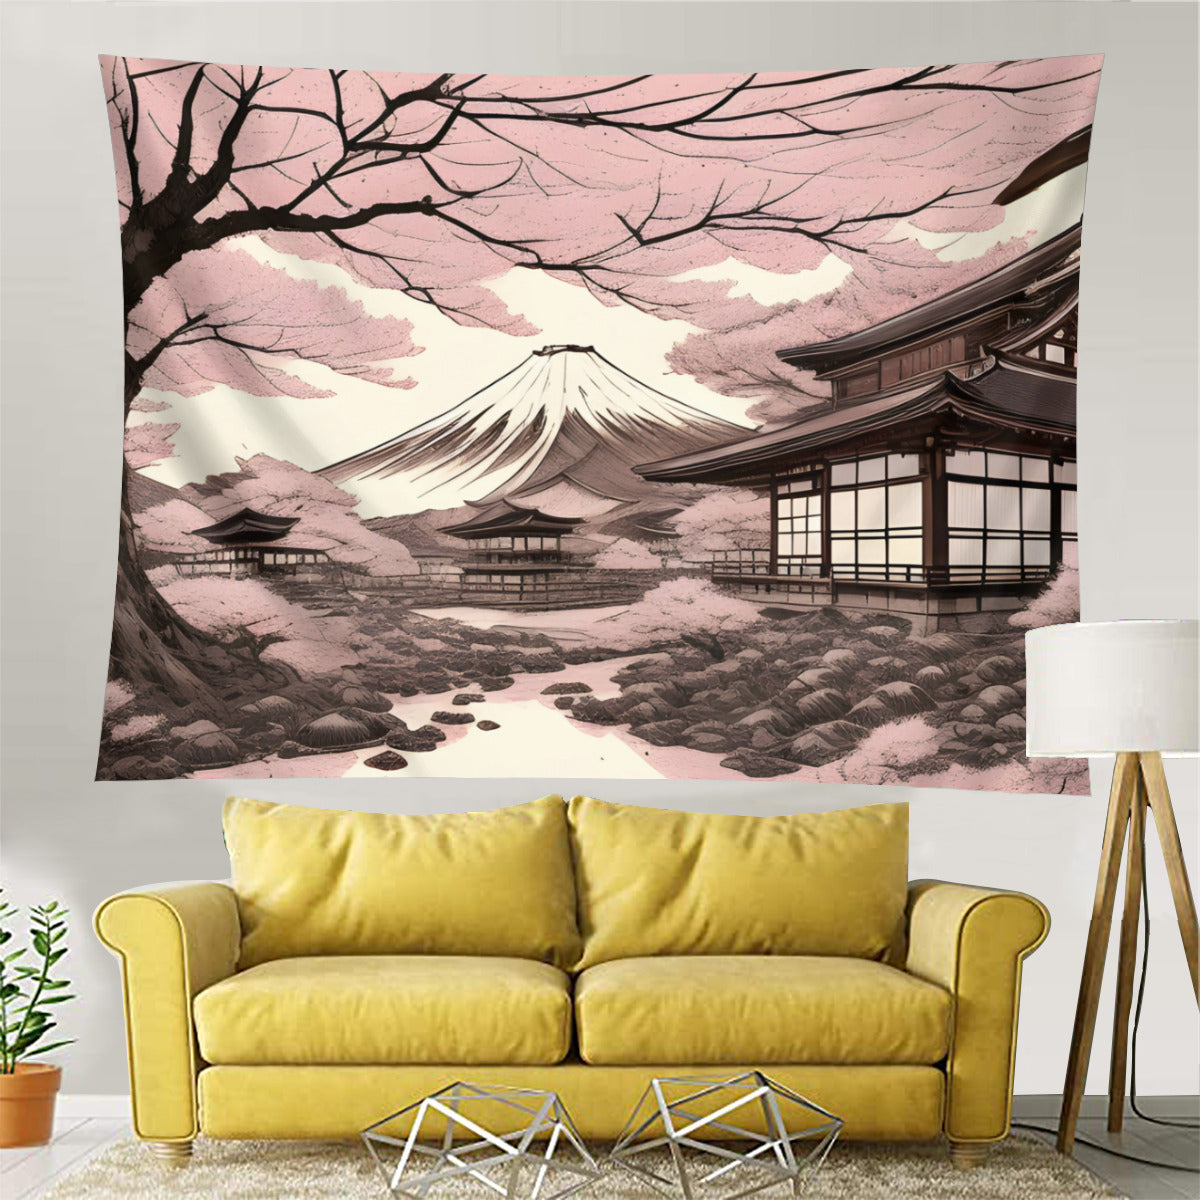 Japanese Mount Fuji Tapestry Wall Hanging